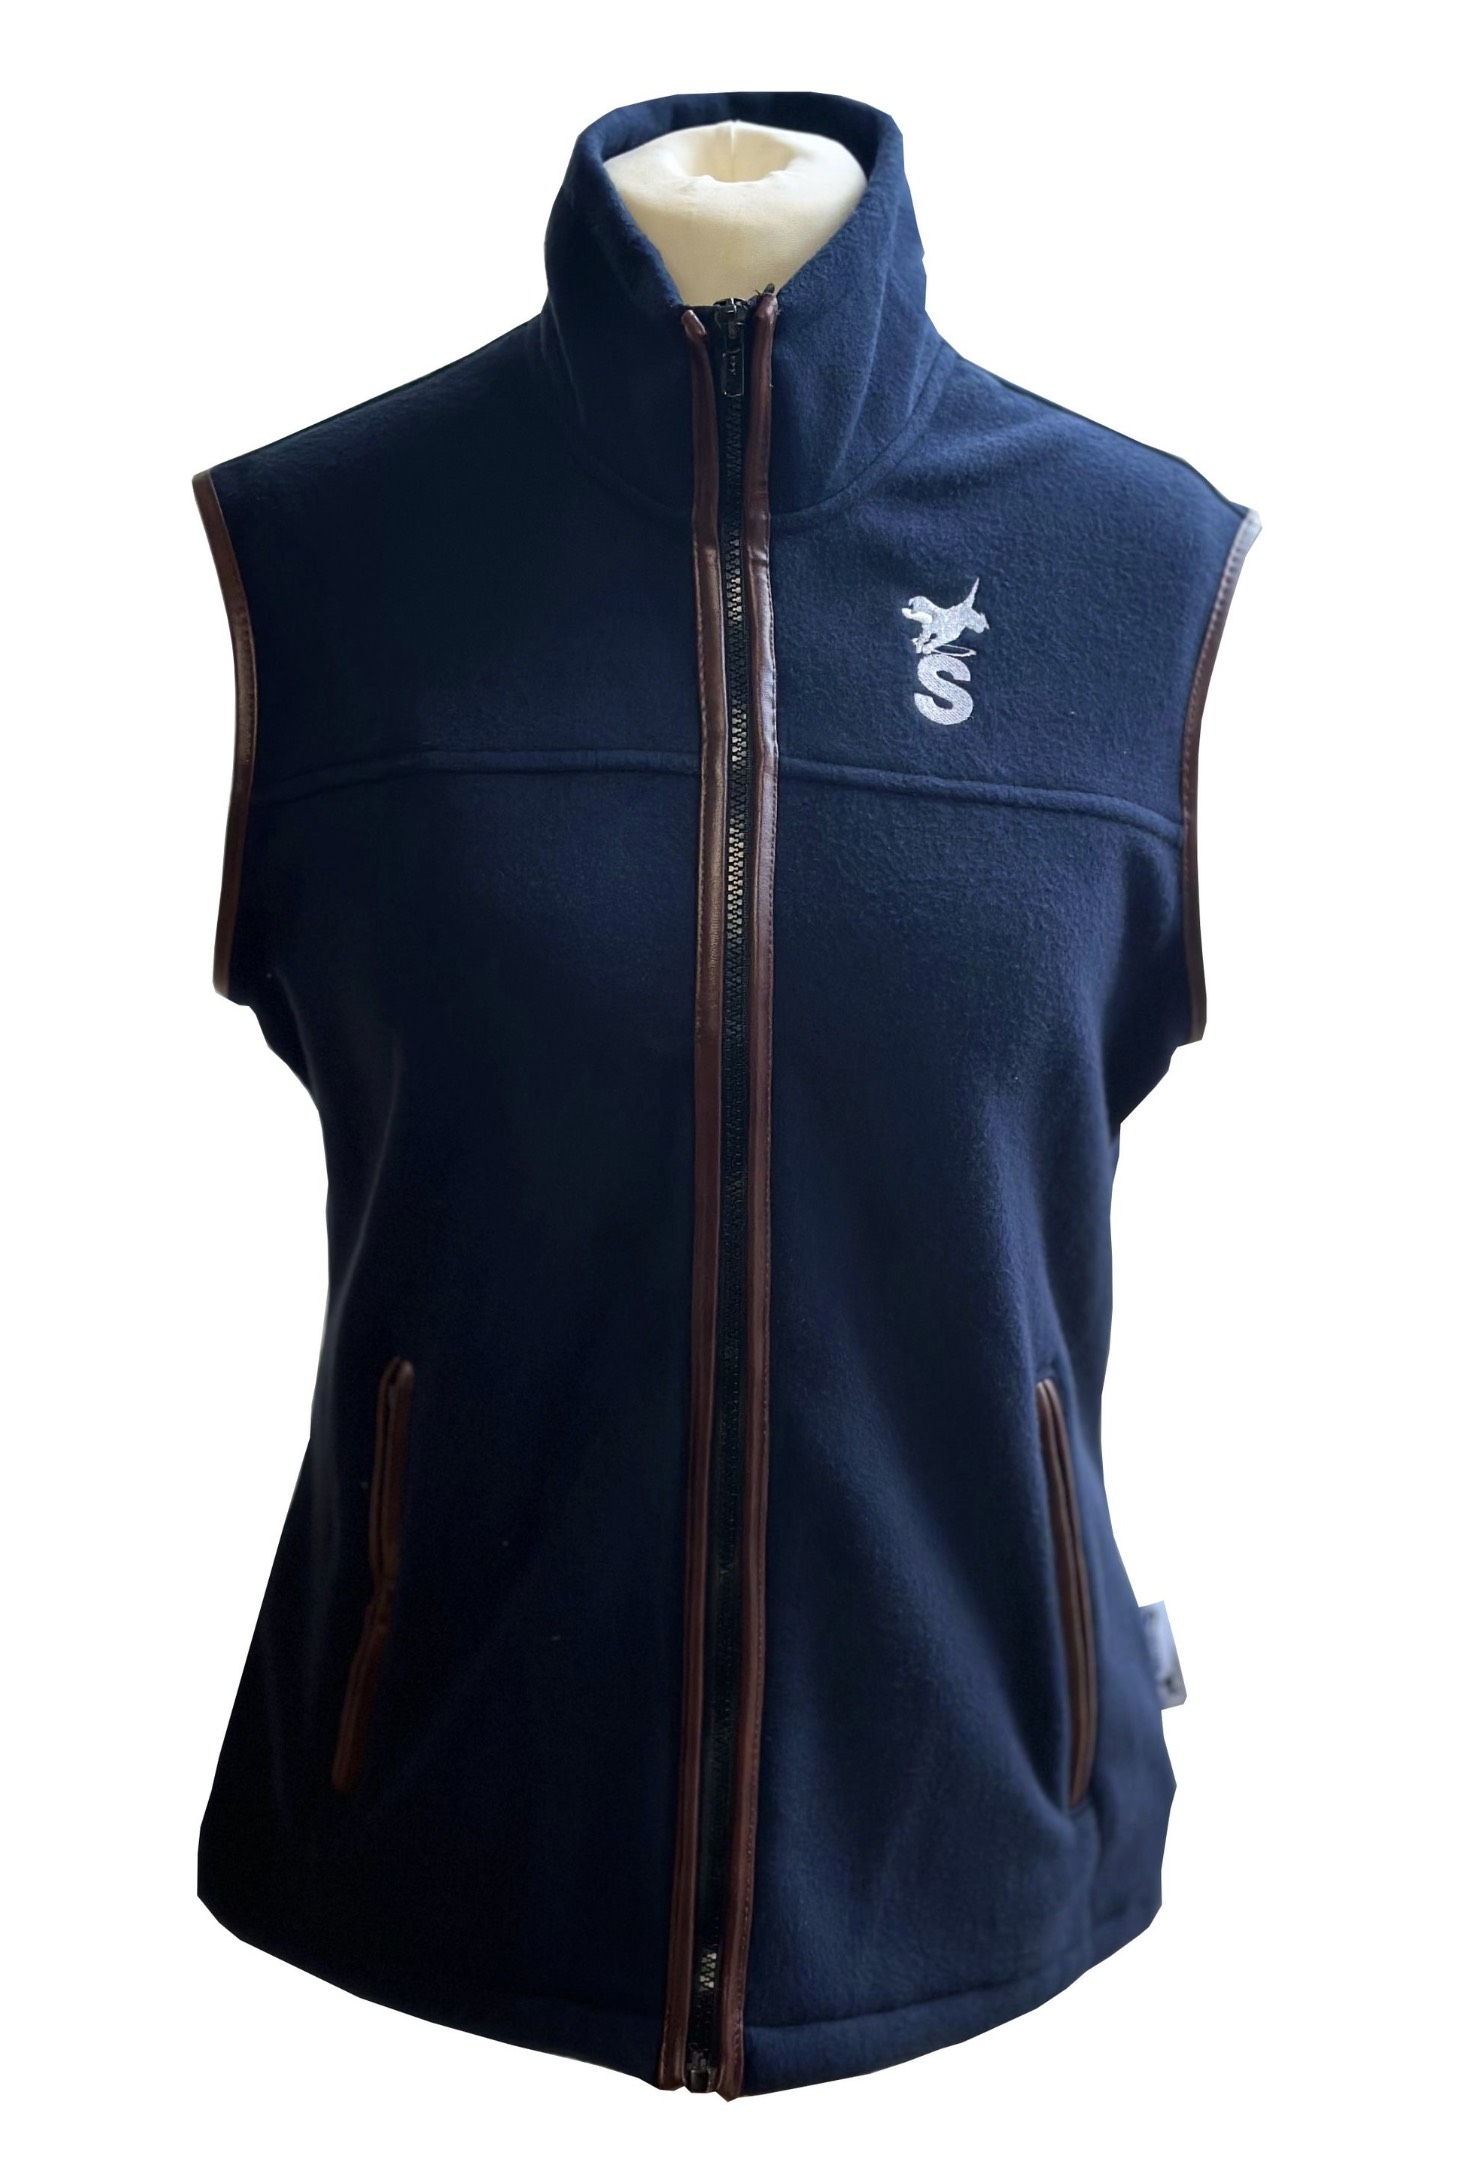 Sporting Fleece vest dame - Navy Blue (Small)